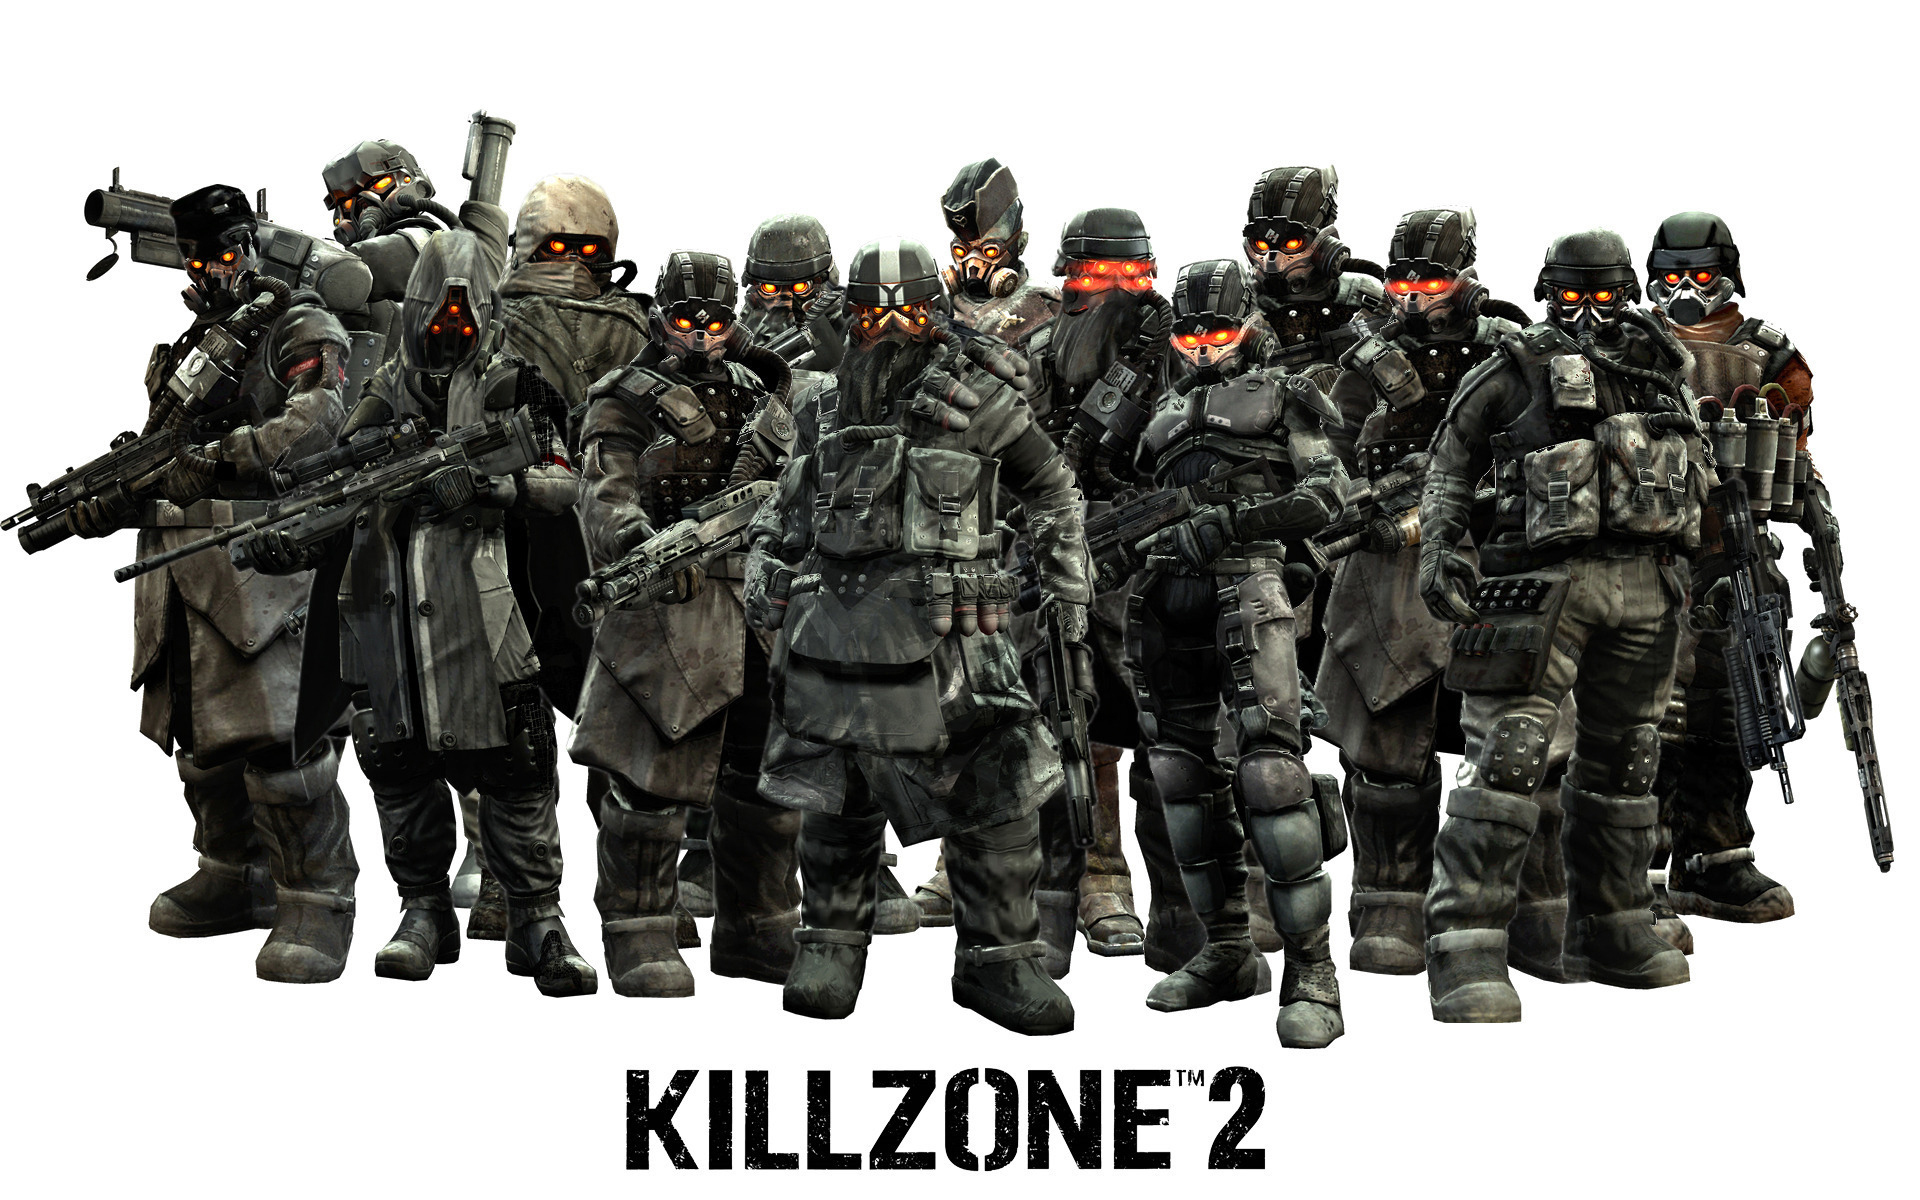 Killzone Warriors Helmet Armor Games Wallpaper Background